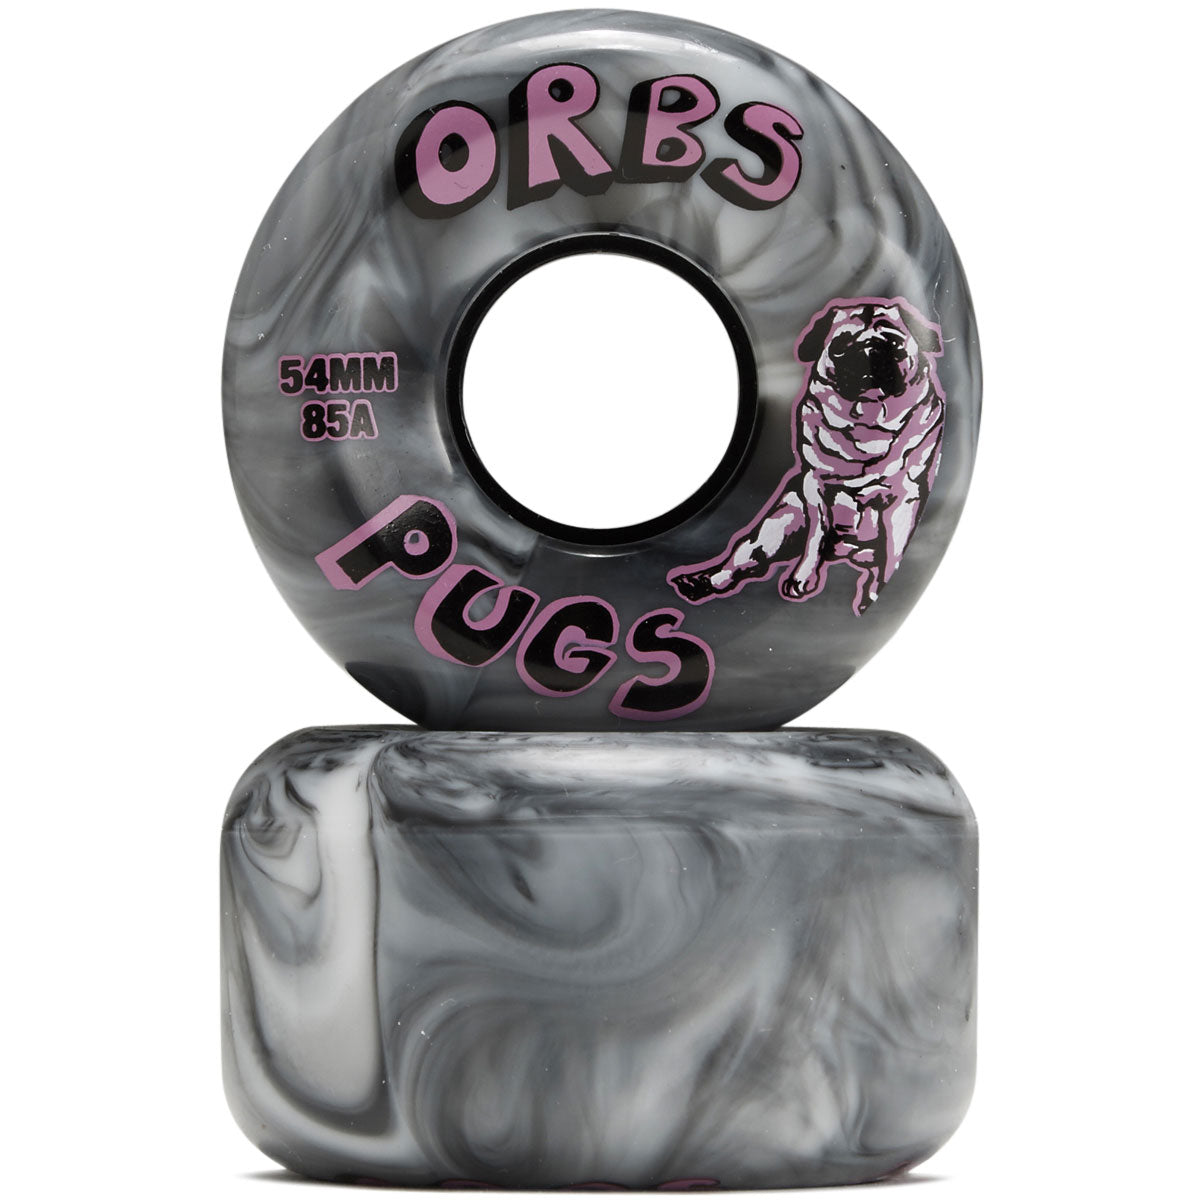 Welcome Orbs Pugs Conical 85A Skateboard Wheels - Black/White Swirl - 54mm image 2